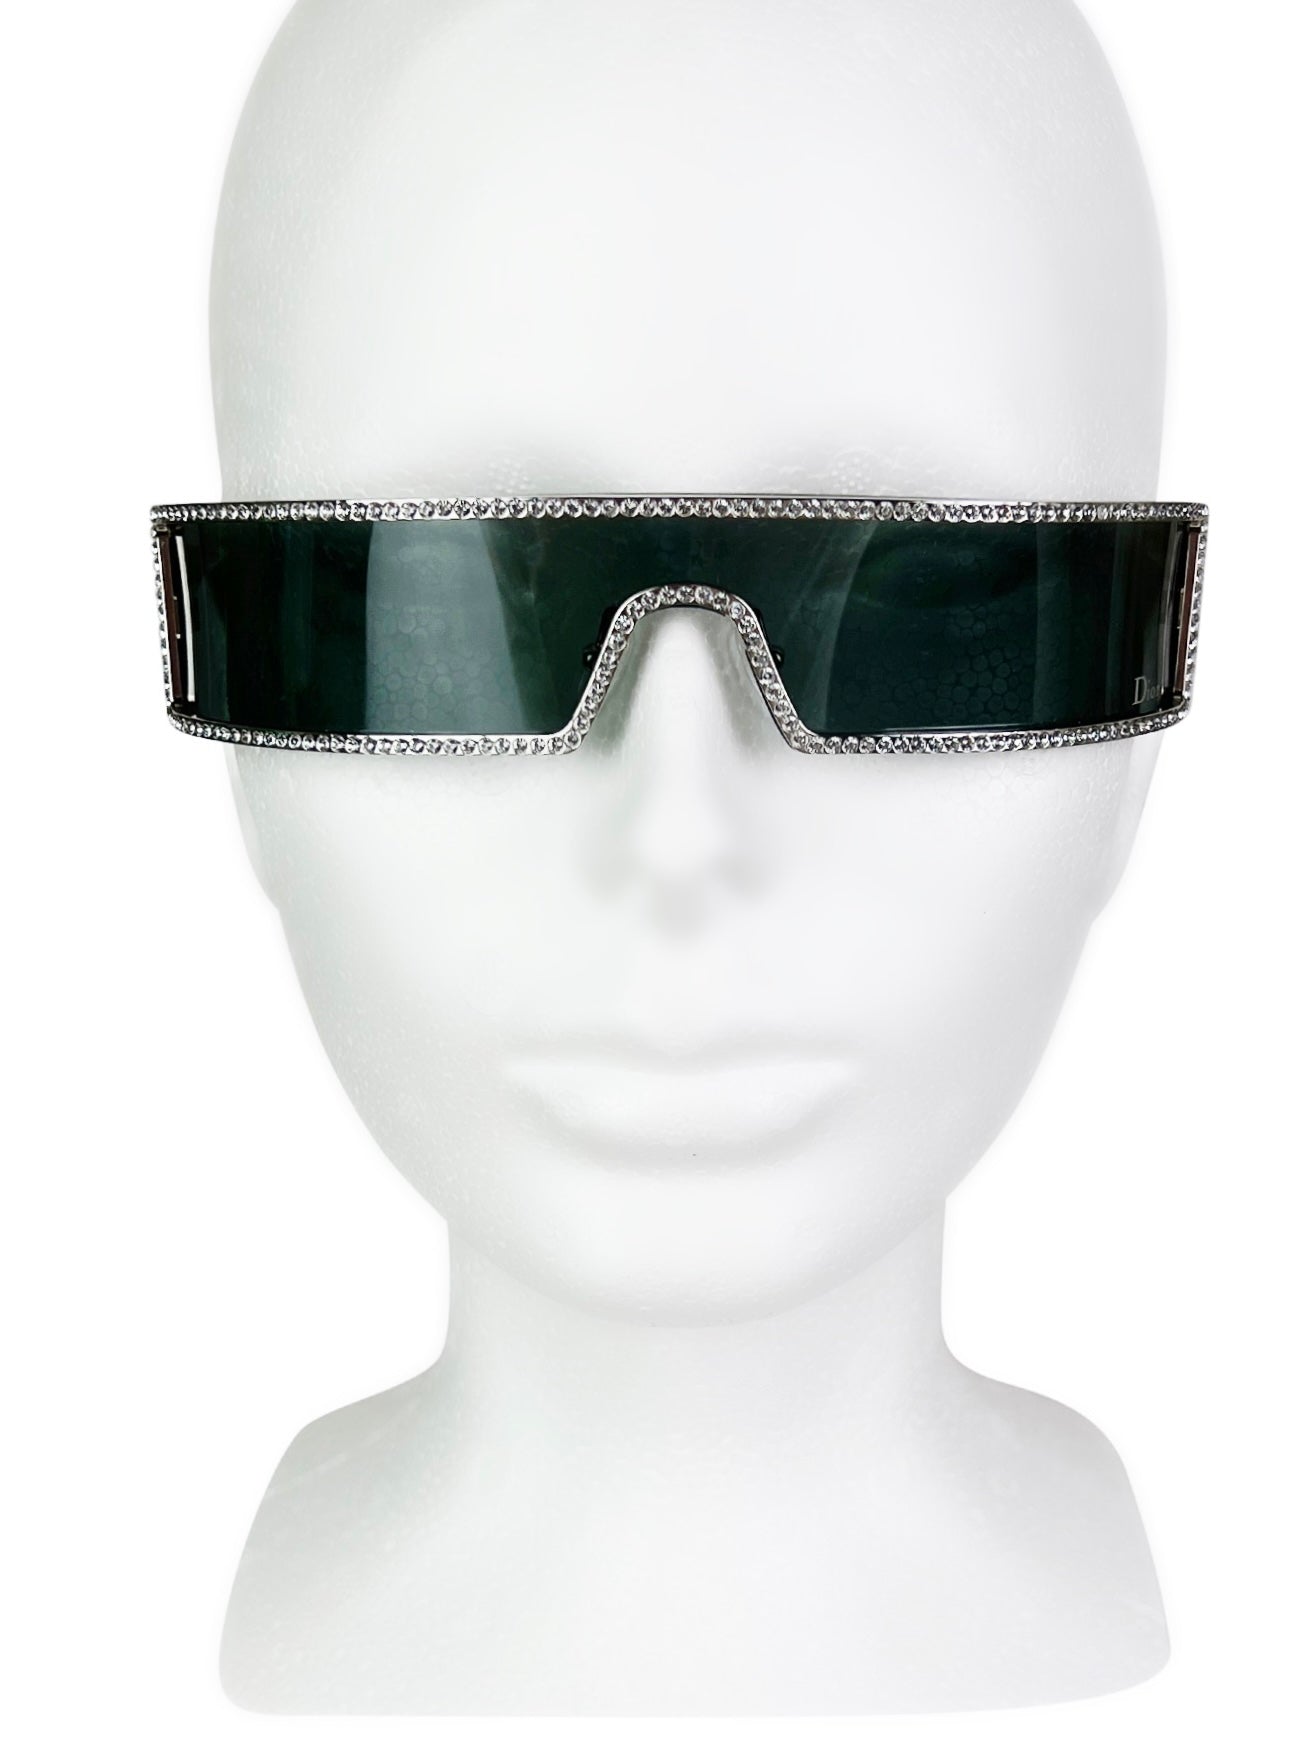 Dior Spring 2003 Punk Swarovski Sunglasses in Clear